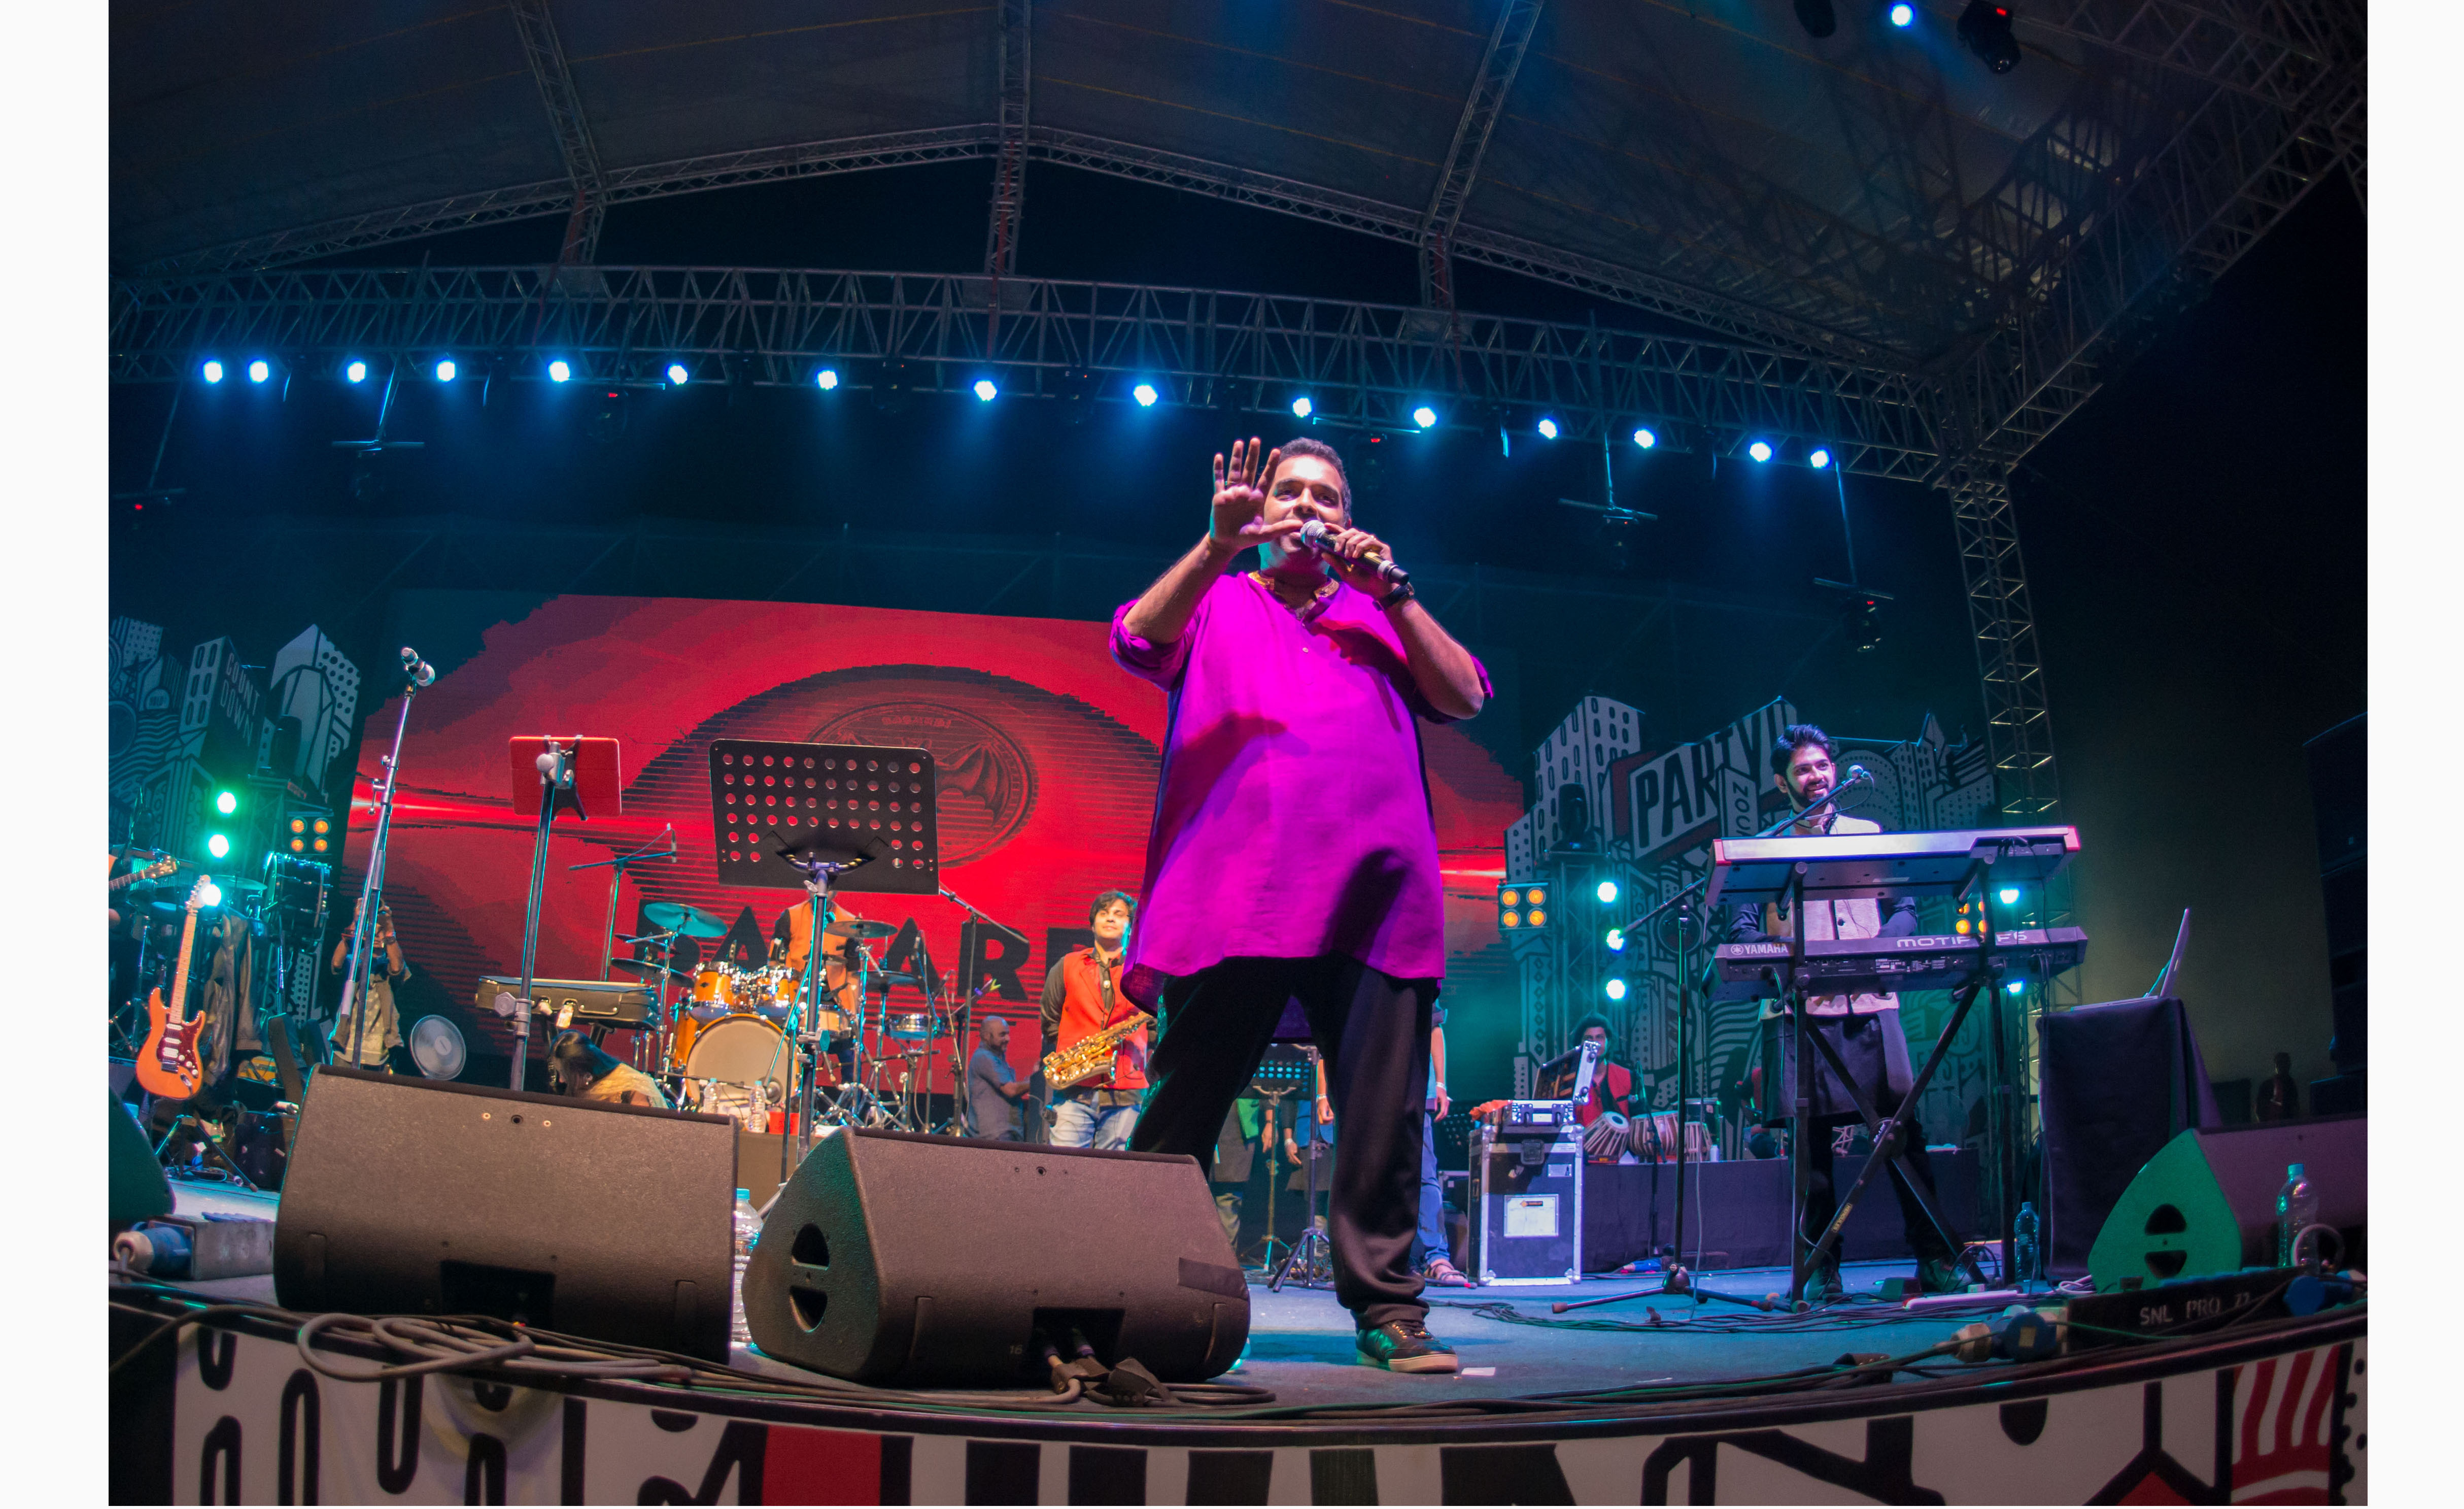 Shankar Mahadevan performance on Day 3 of Bacardi NH7 Weekender Pune. Photo Credit - Clique Photography